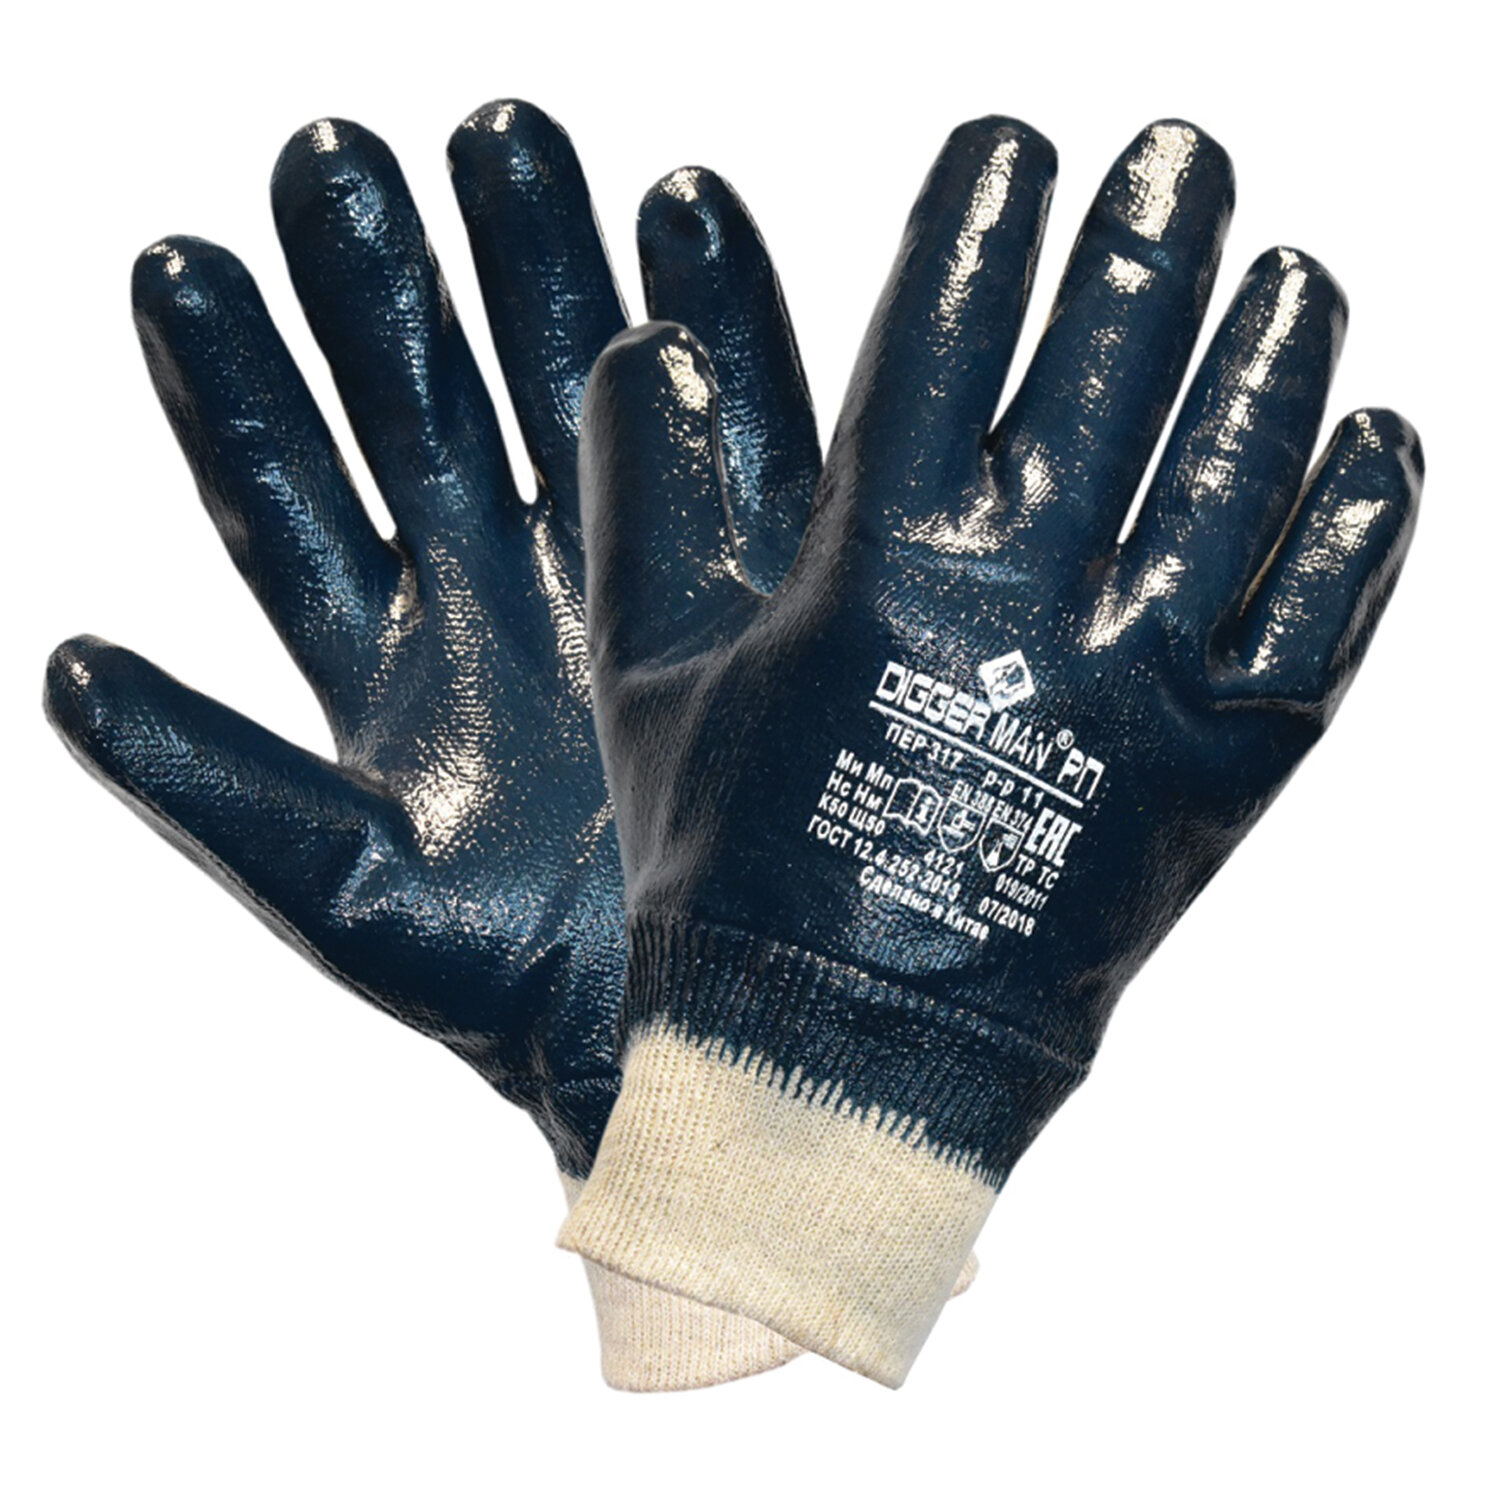 Перчатки DIGGERMAN хб с нитриловым обливом размер XXL, 4 пары нитриловые перчатки diggerman